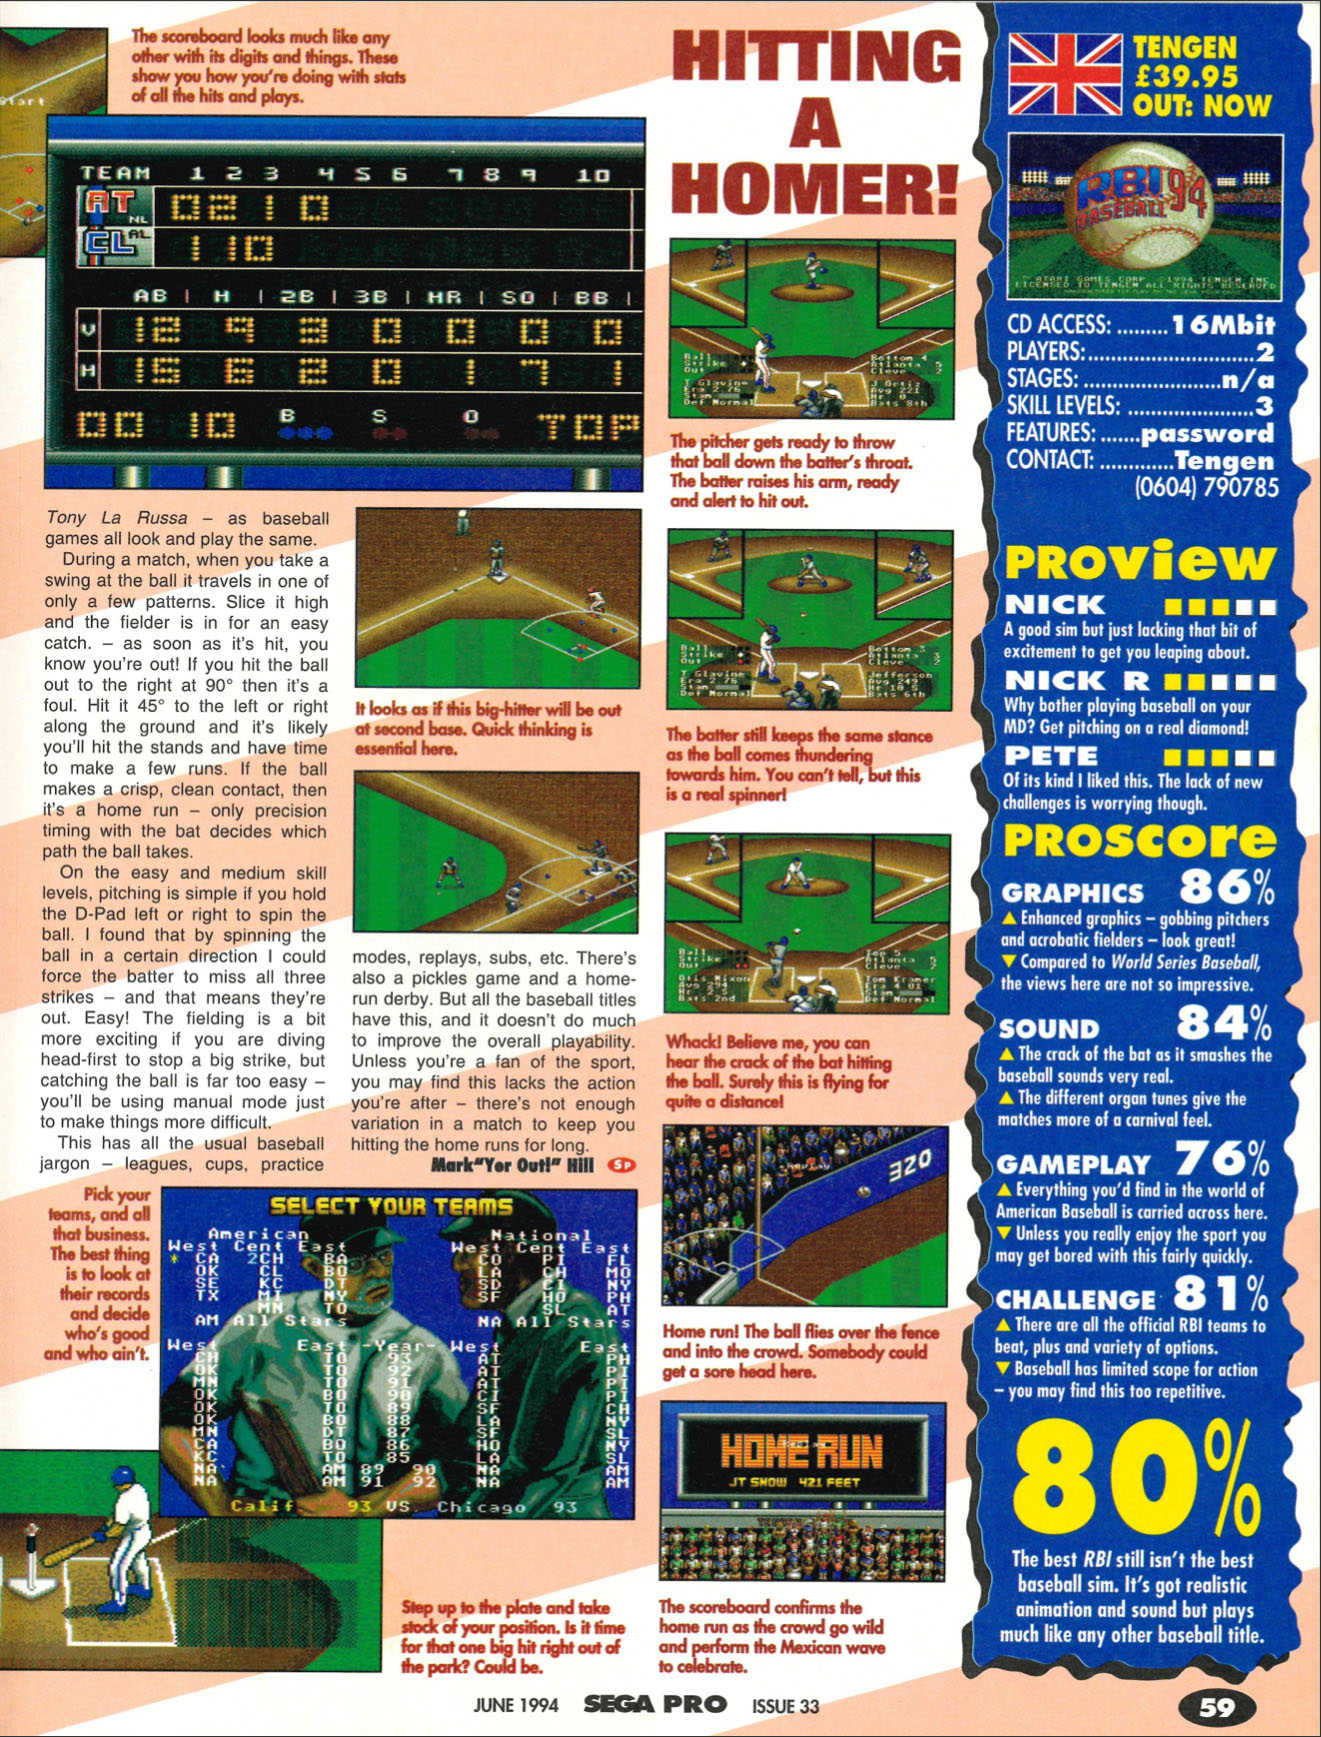 RBI Baseball '94 Review, Sega Pro June 1994 page 59